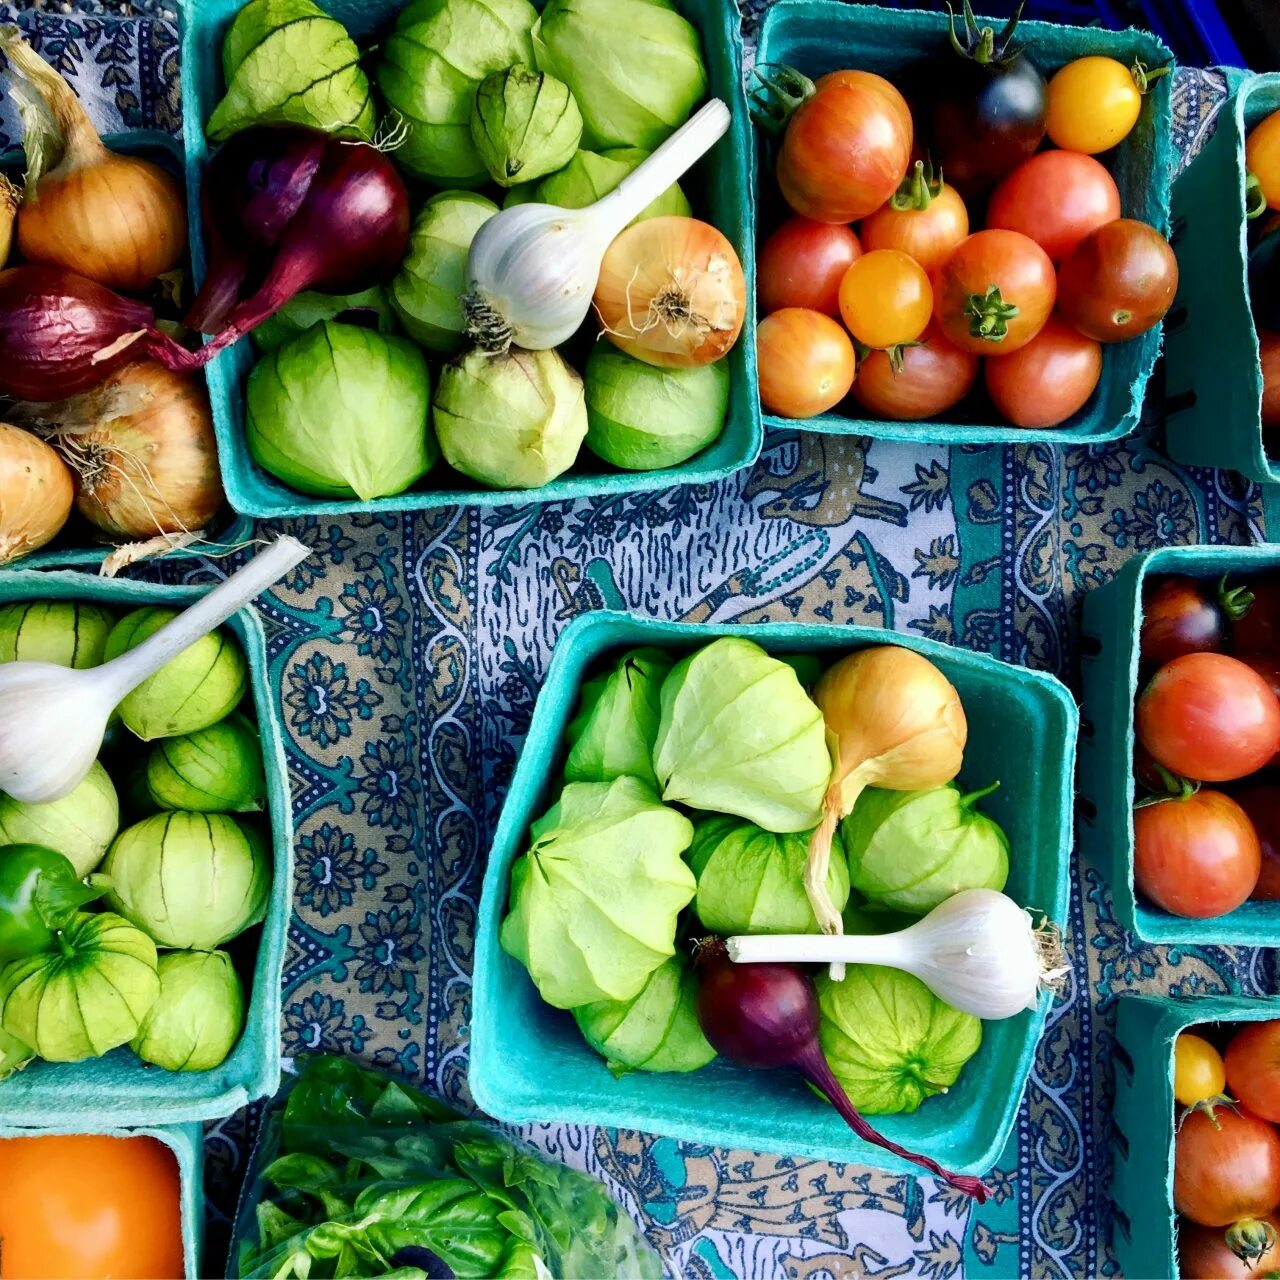 Цена овощей за кг. Овощи и фрукты. Овощ на ц. Самый красивый овощ на земле. Когда подешевеют овощи.